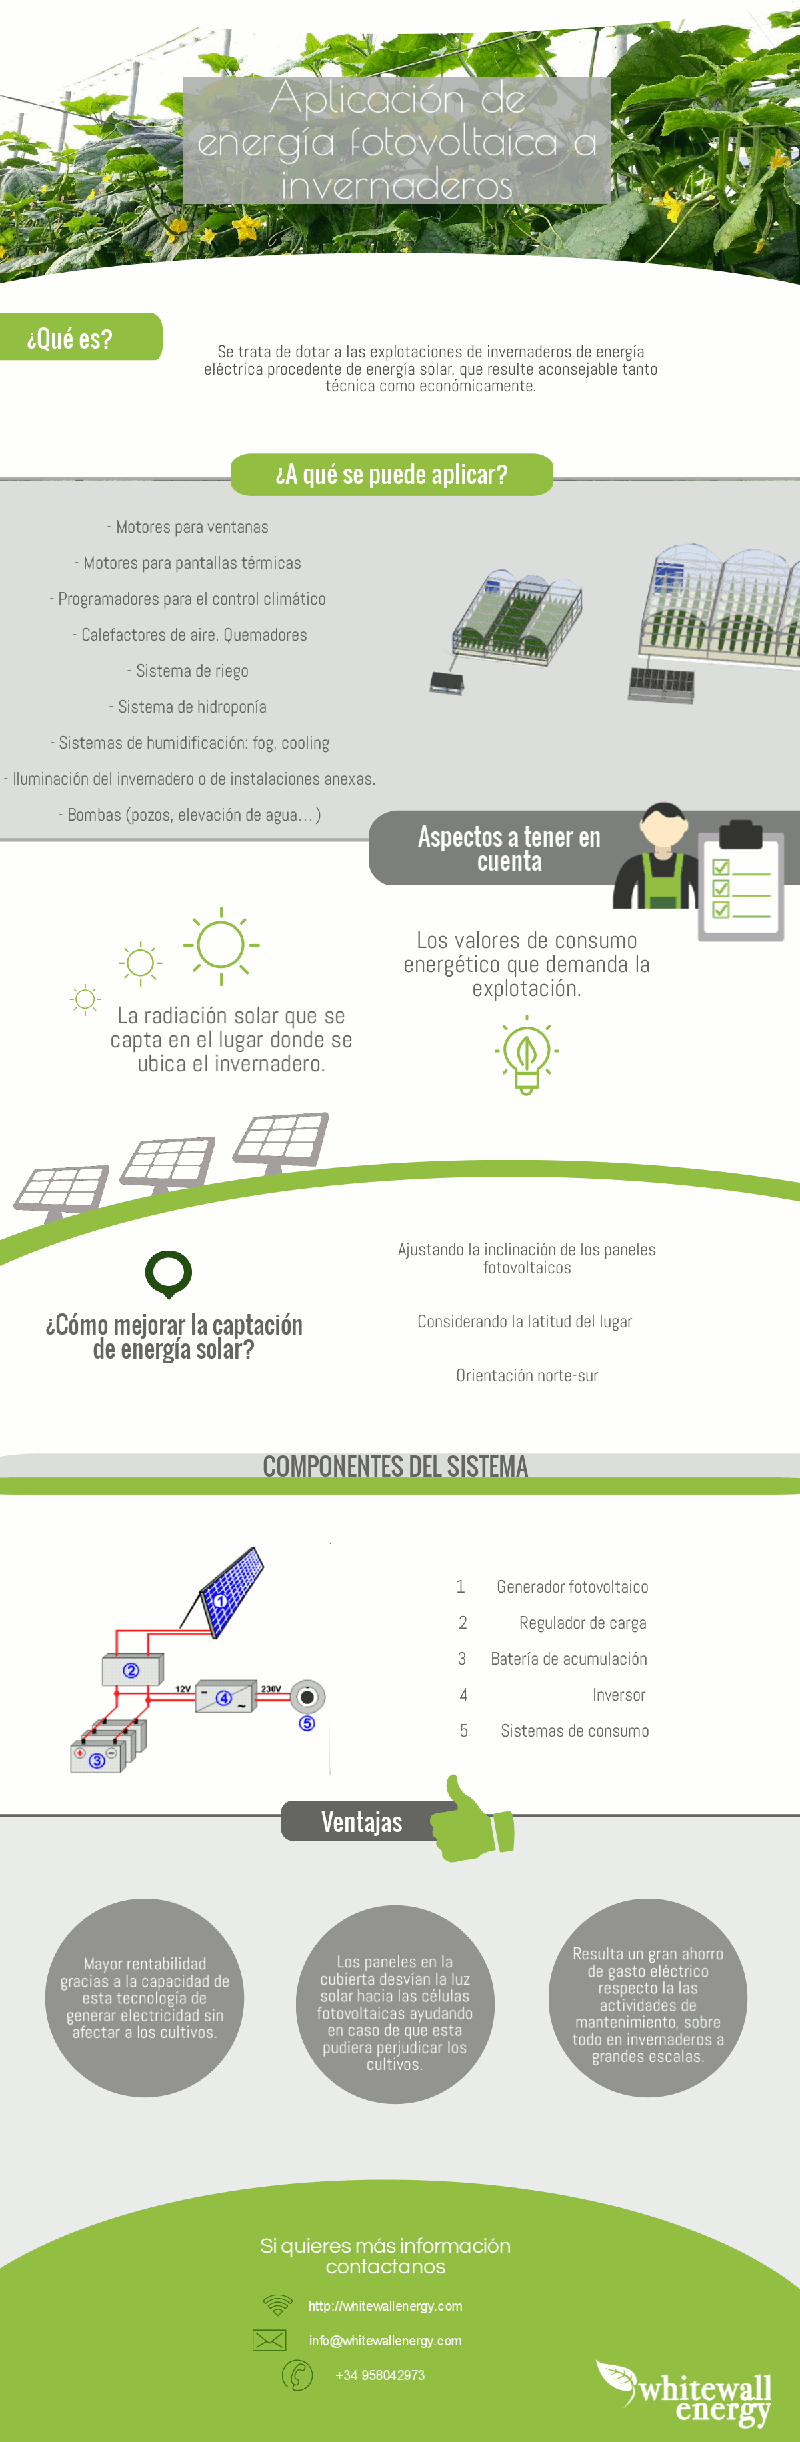 [Infografía] Aplicación de sistemas fotovoltaicos en invernaderos